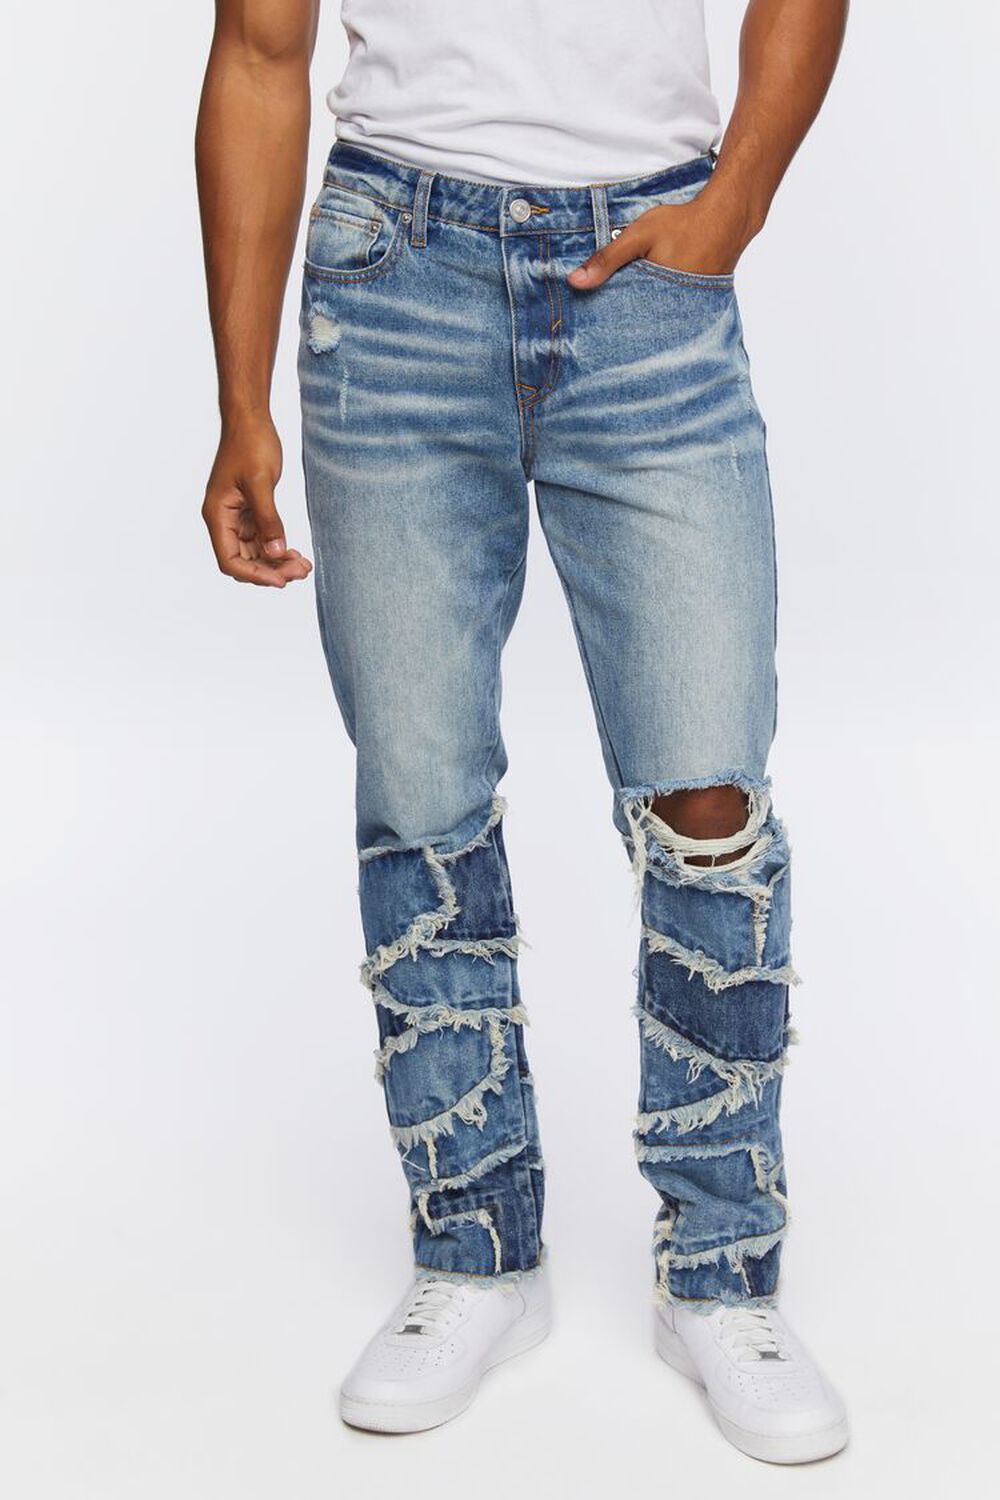 MEDIUM DENIM Frayed Patchwork Slim-Fit Jeans, image 2